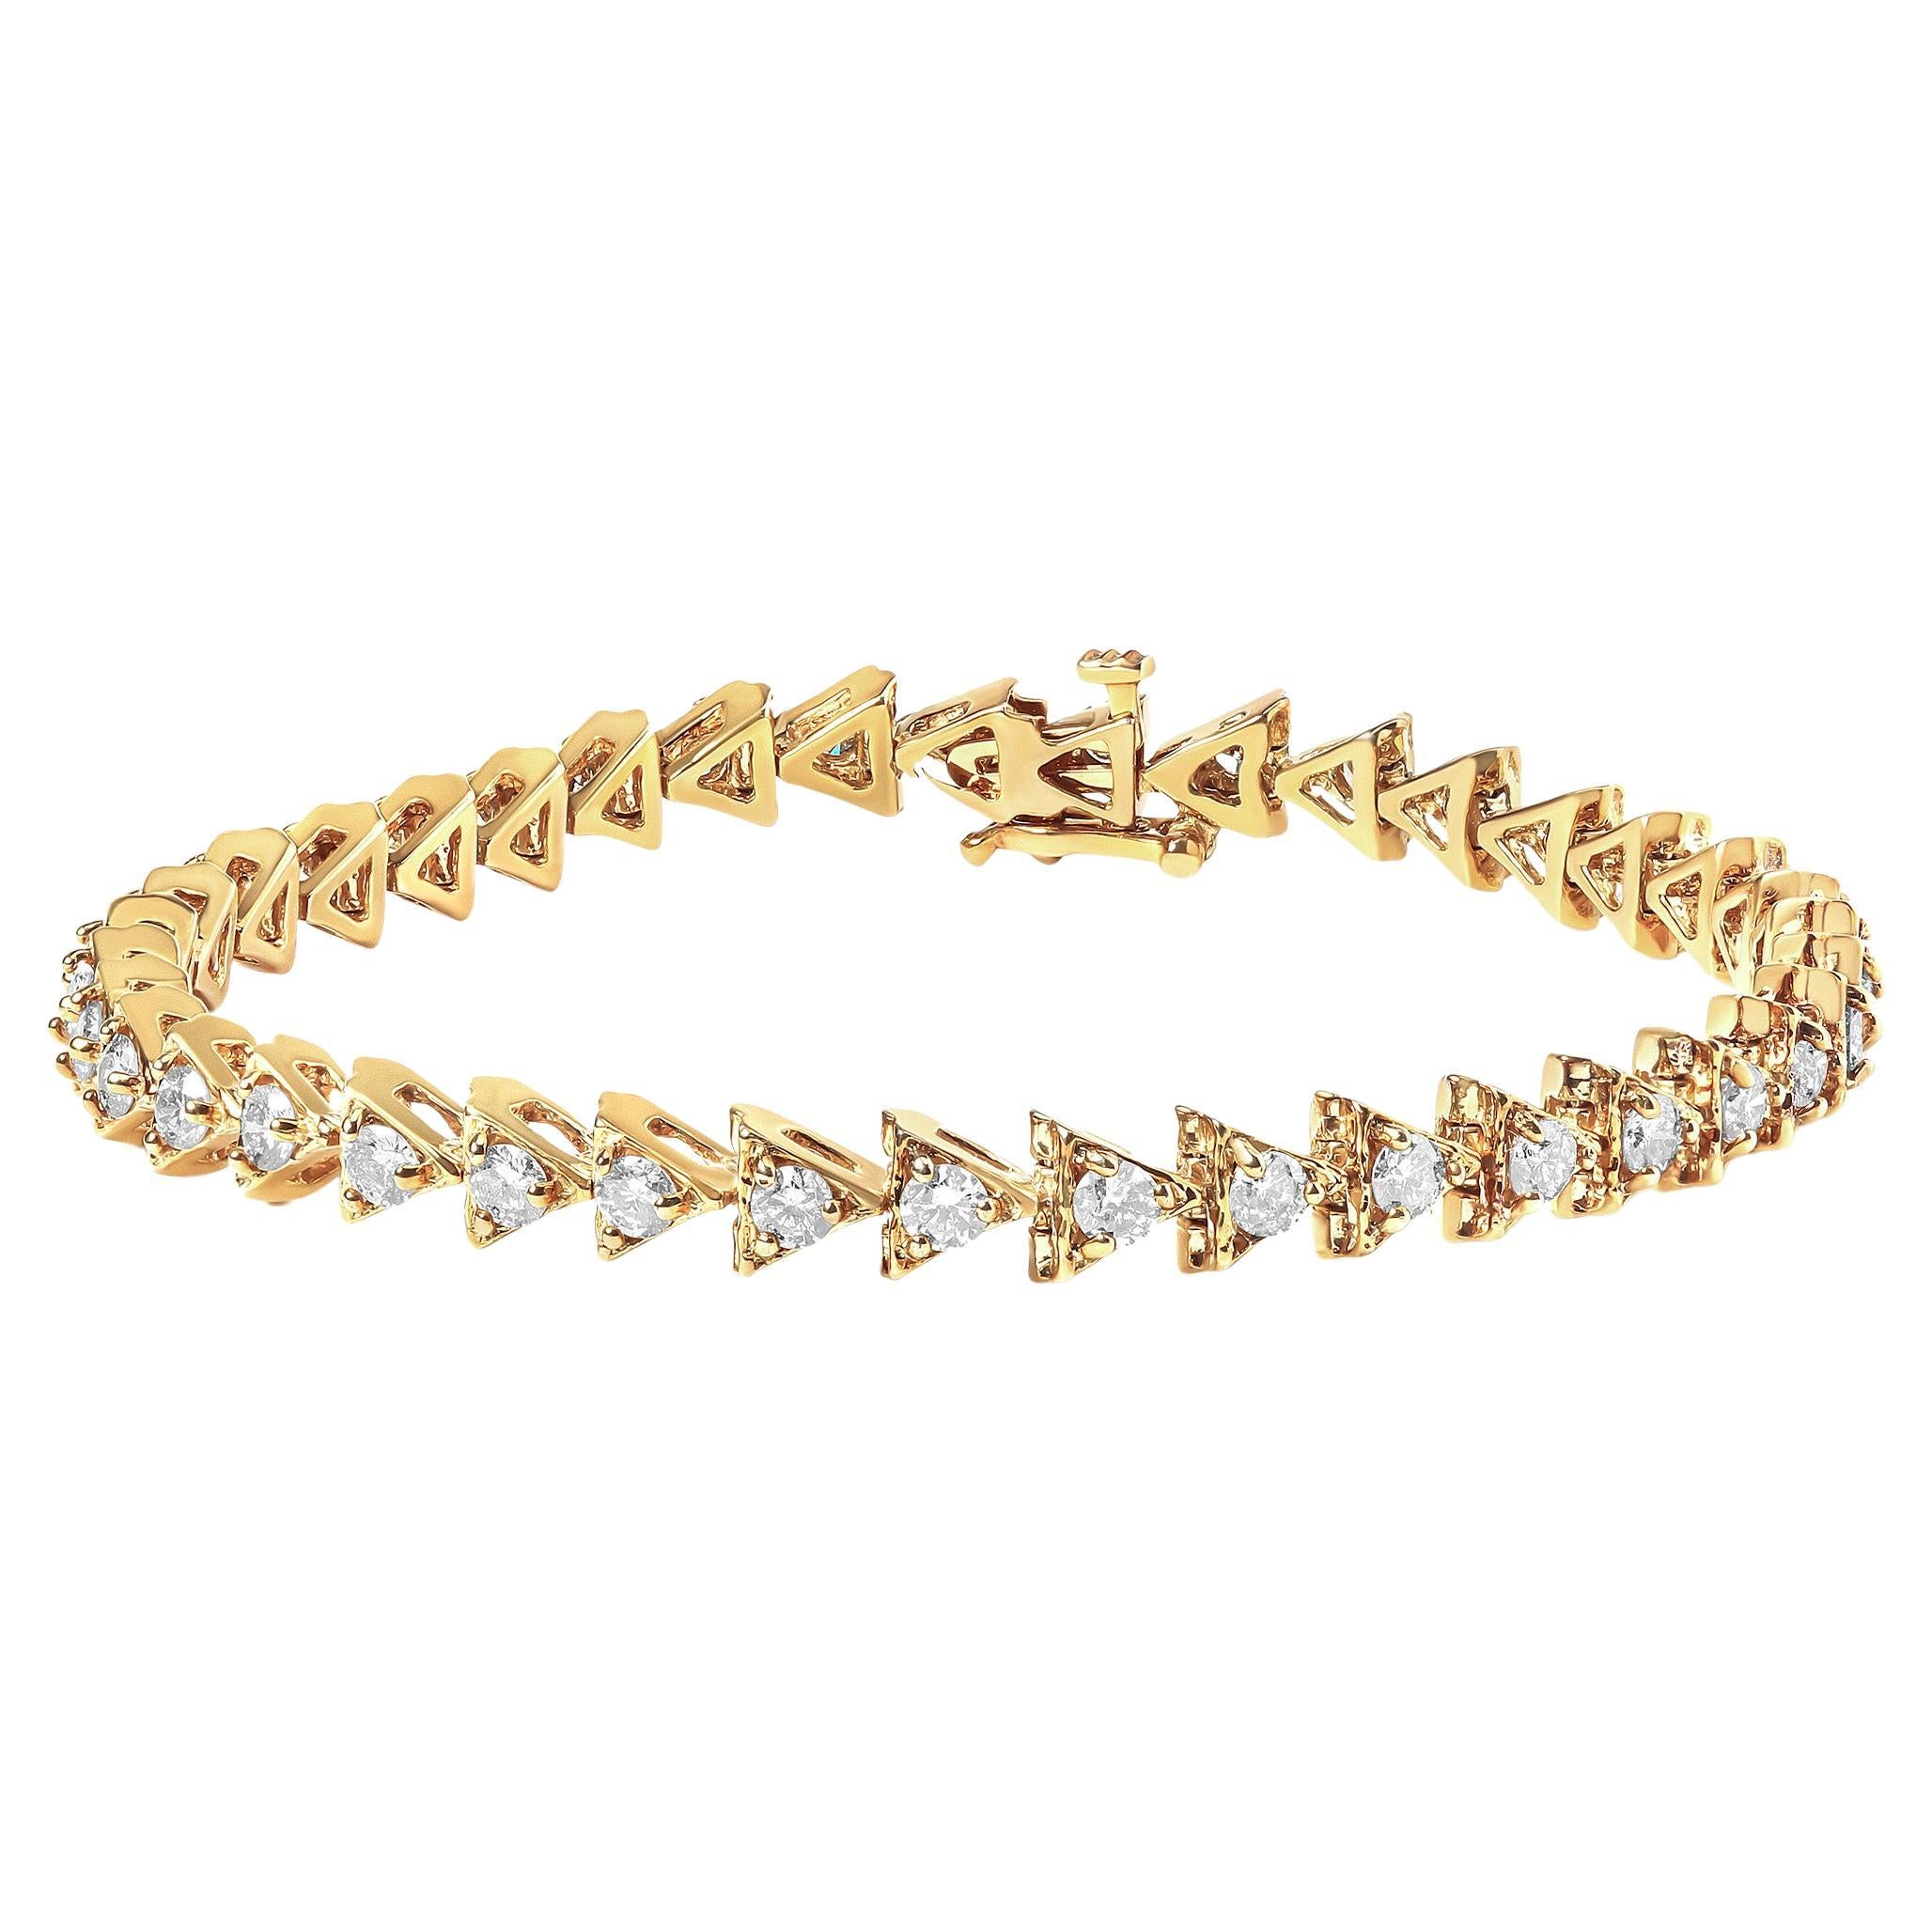 10K Yellow Gold Over Silver 3.0 Carat Diamond Triangle Link Tennis Bracelet